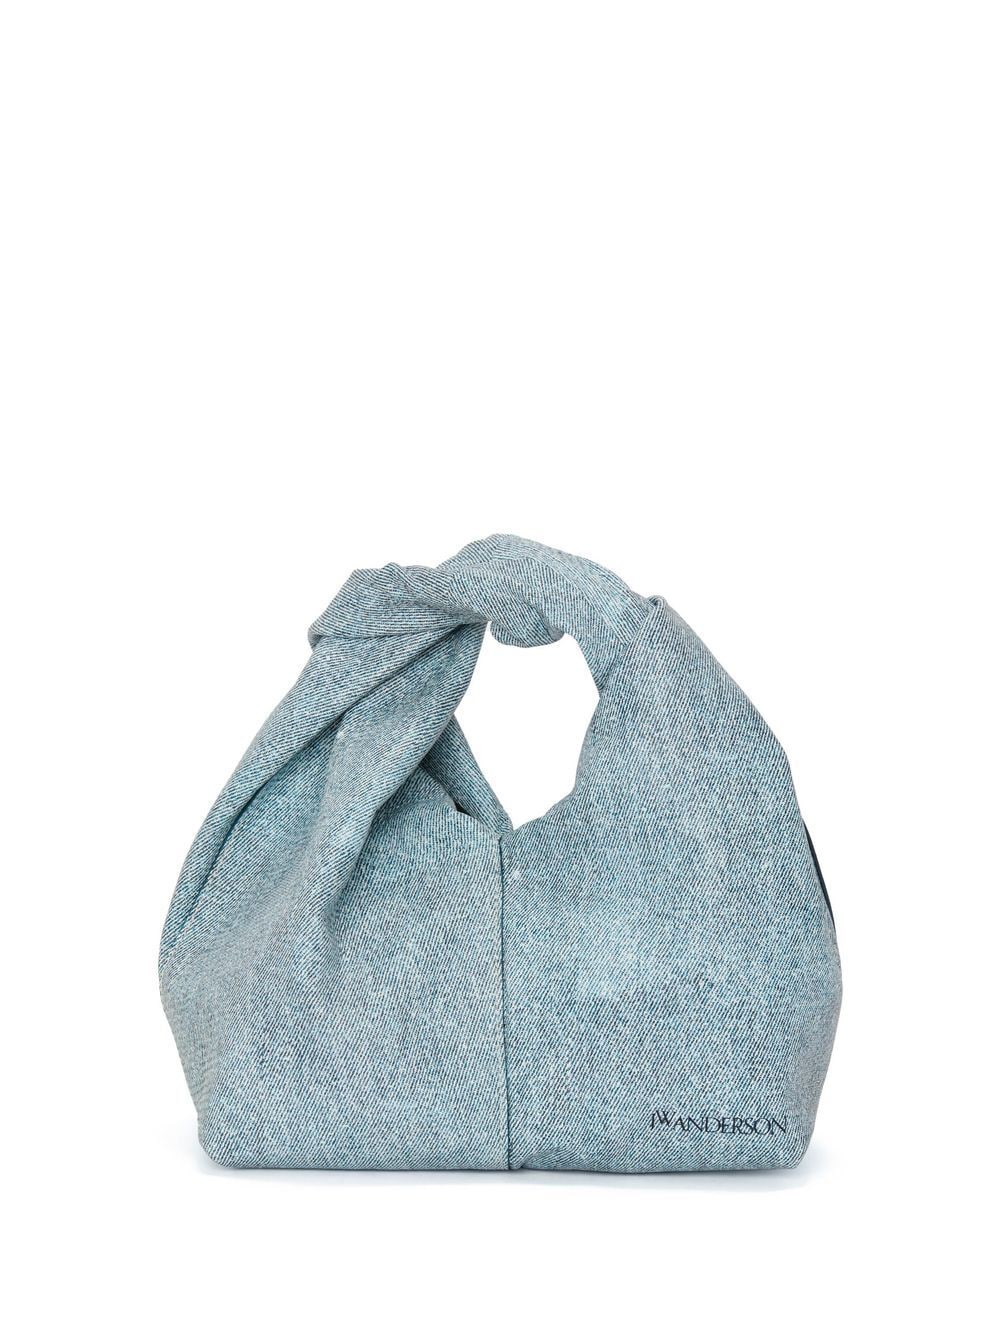 JW Anderson mini Twister tote bag - Blue